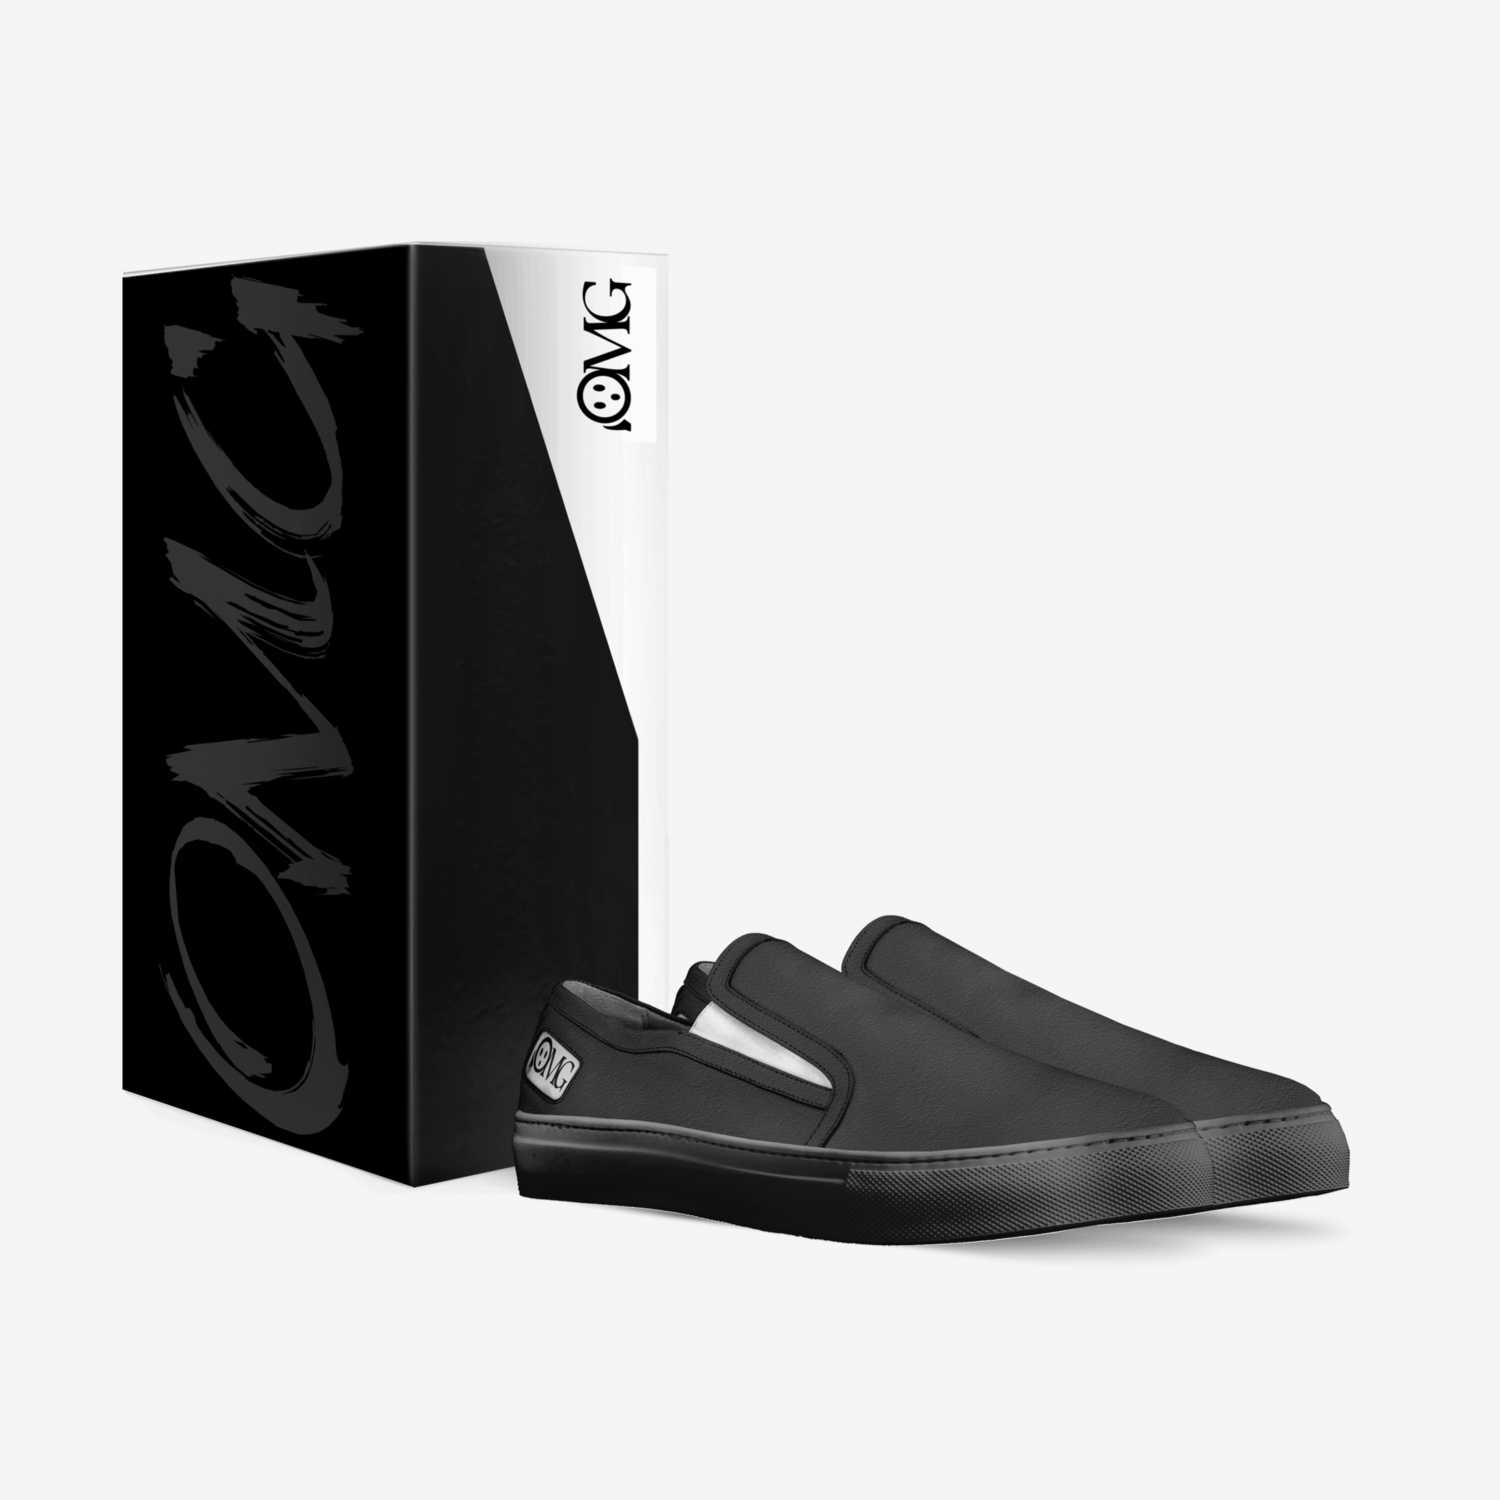 theomgblack custom made in Italy shoes by Joe Harris | Box view